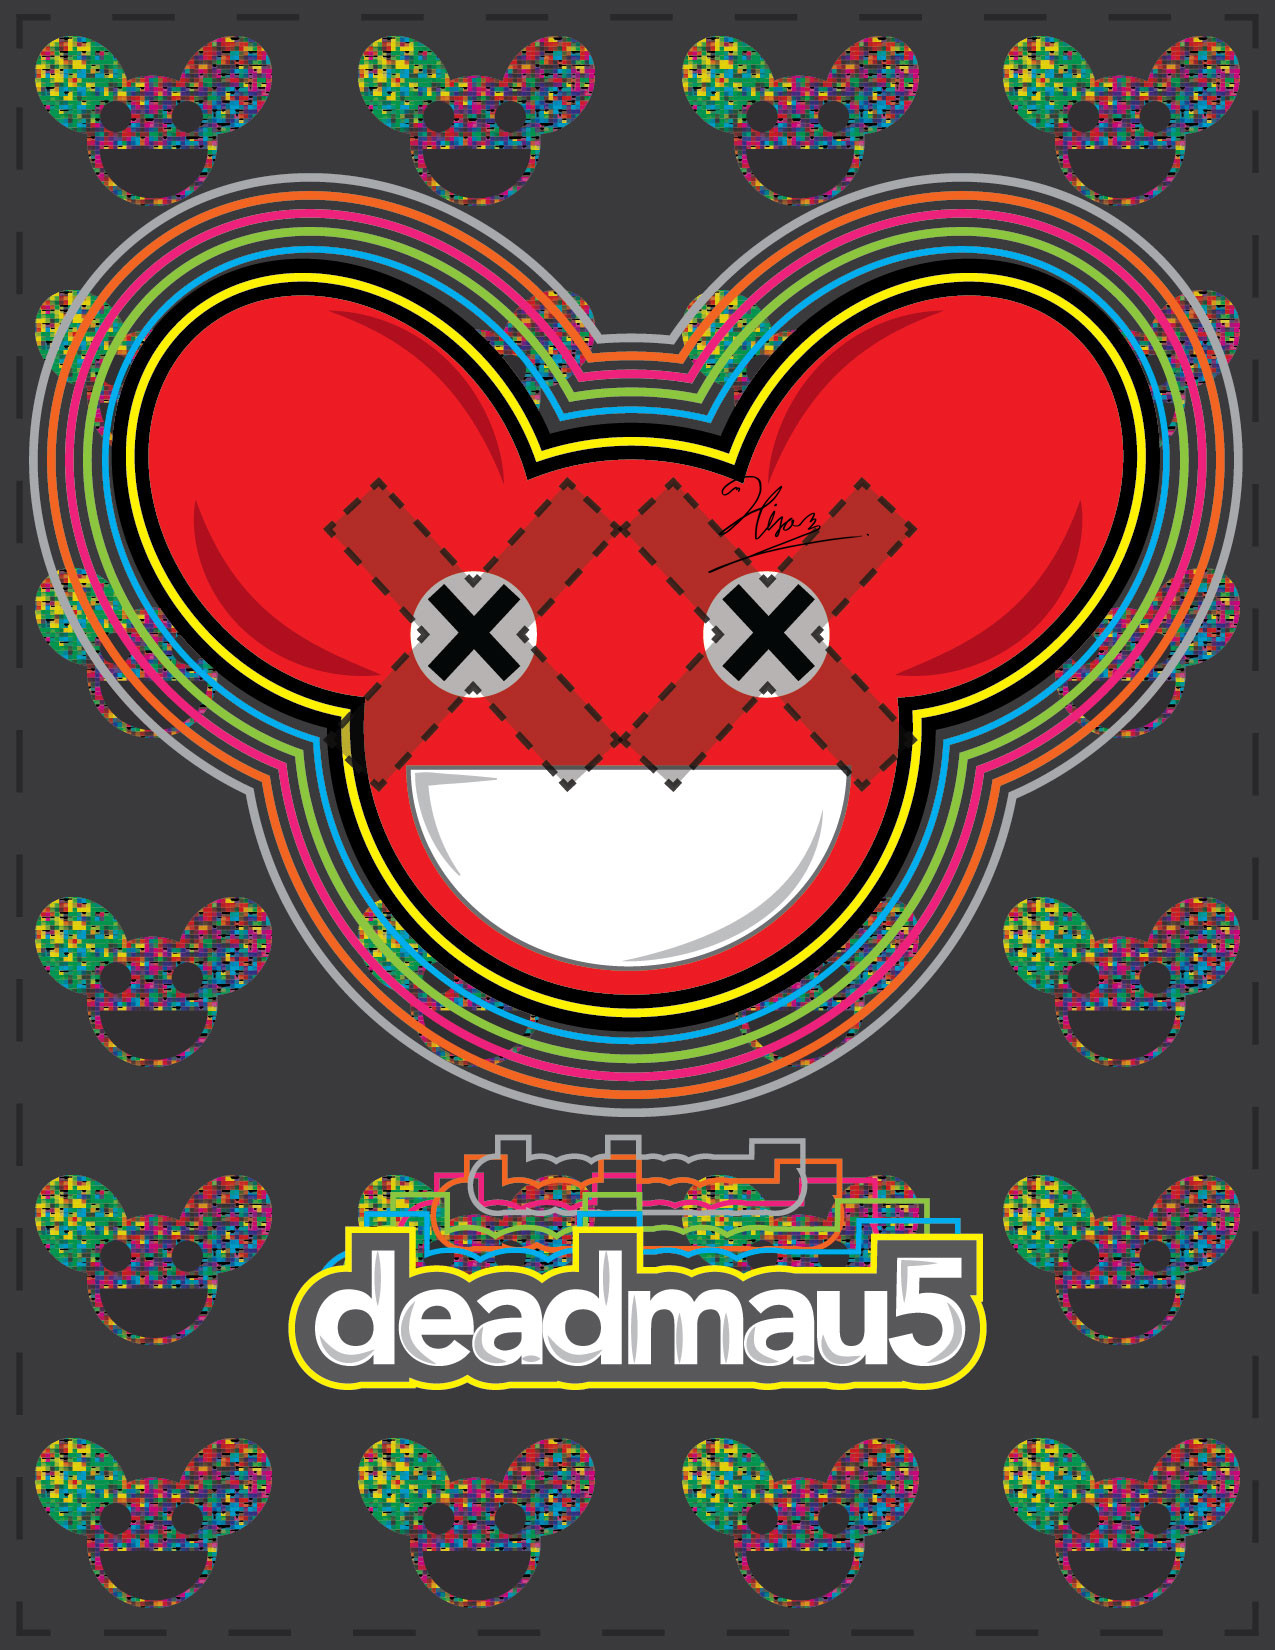 deadmau5 head designs